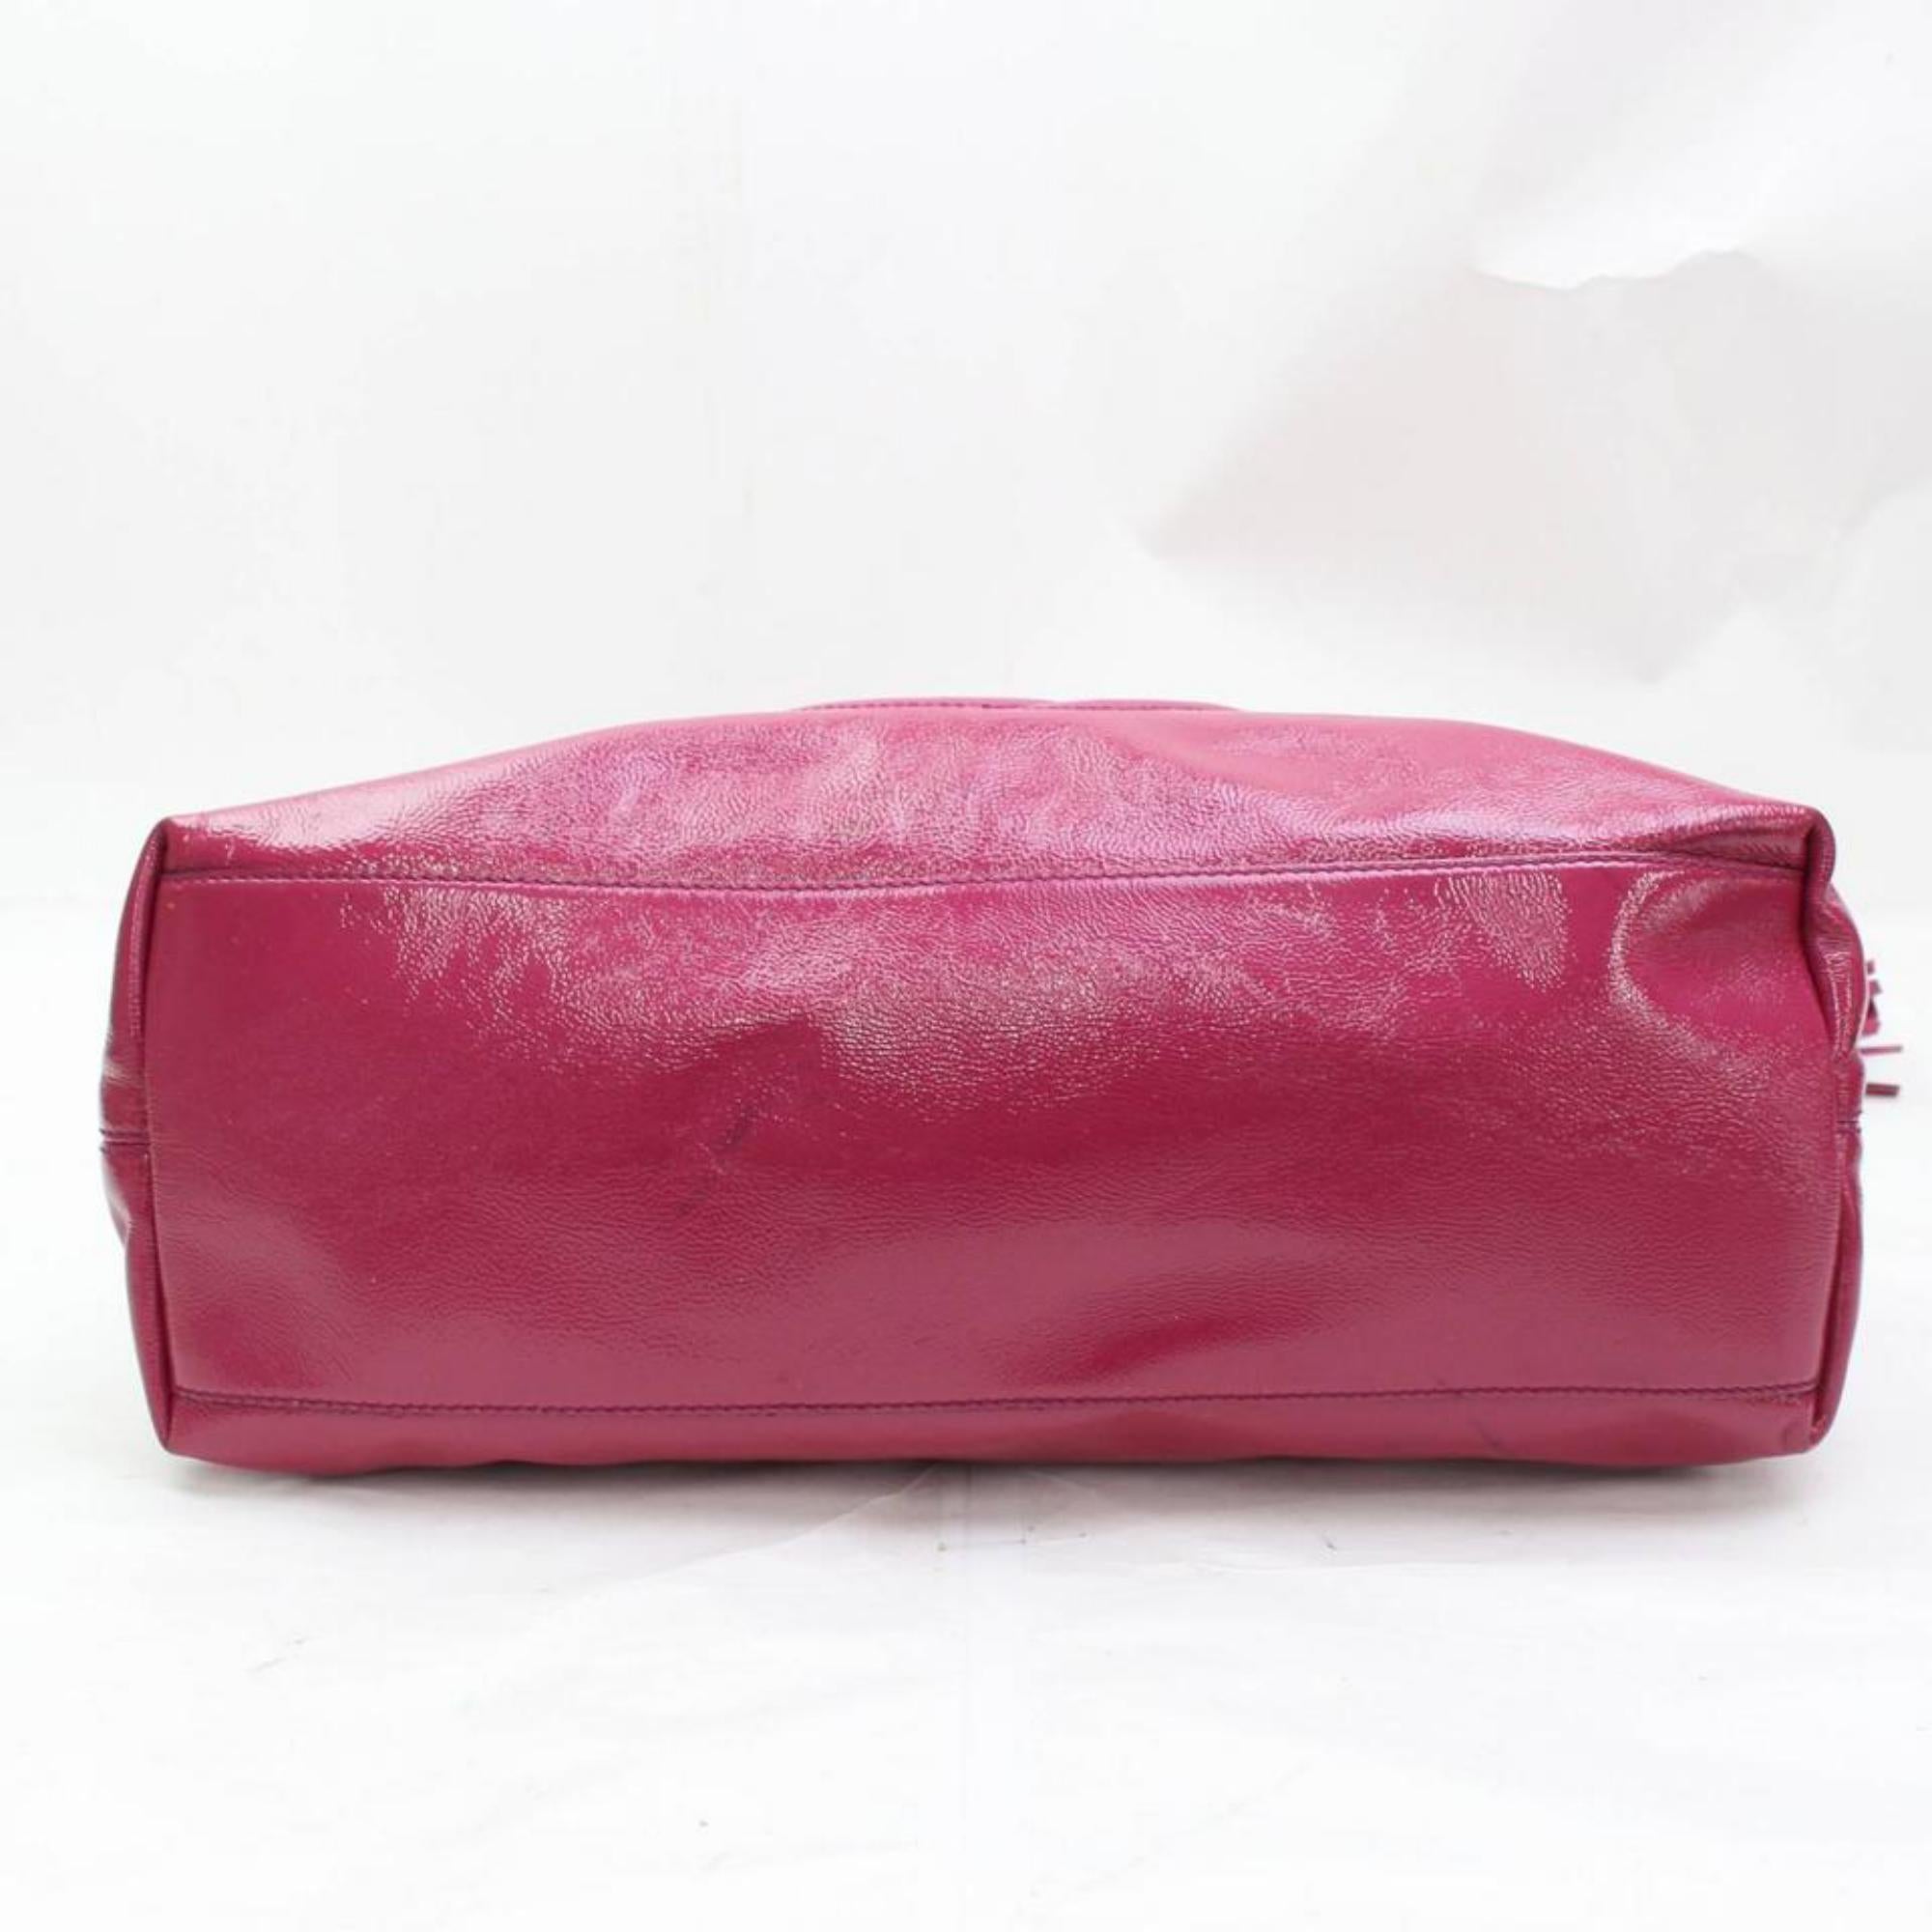 Gucci Soho Chain Tote 867472 Fuchsia Patent Leather Shoulder Bag For Sale 4